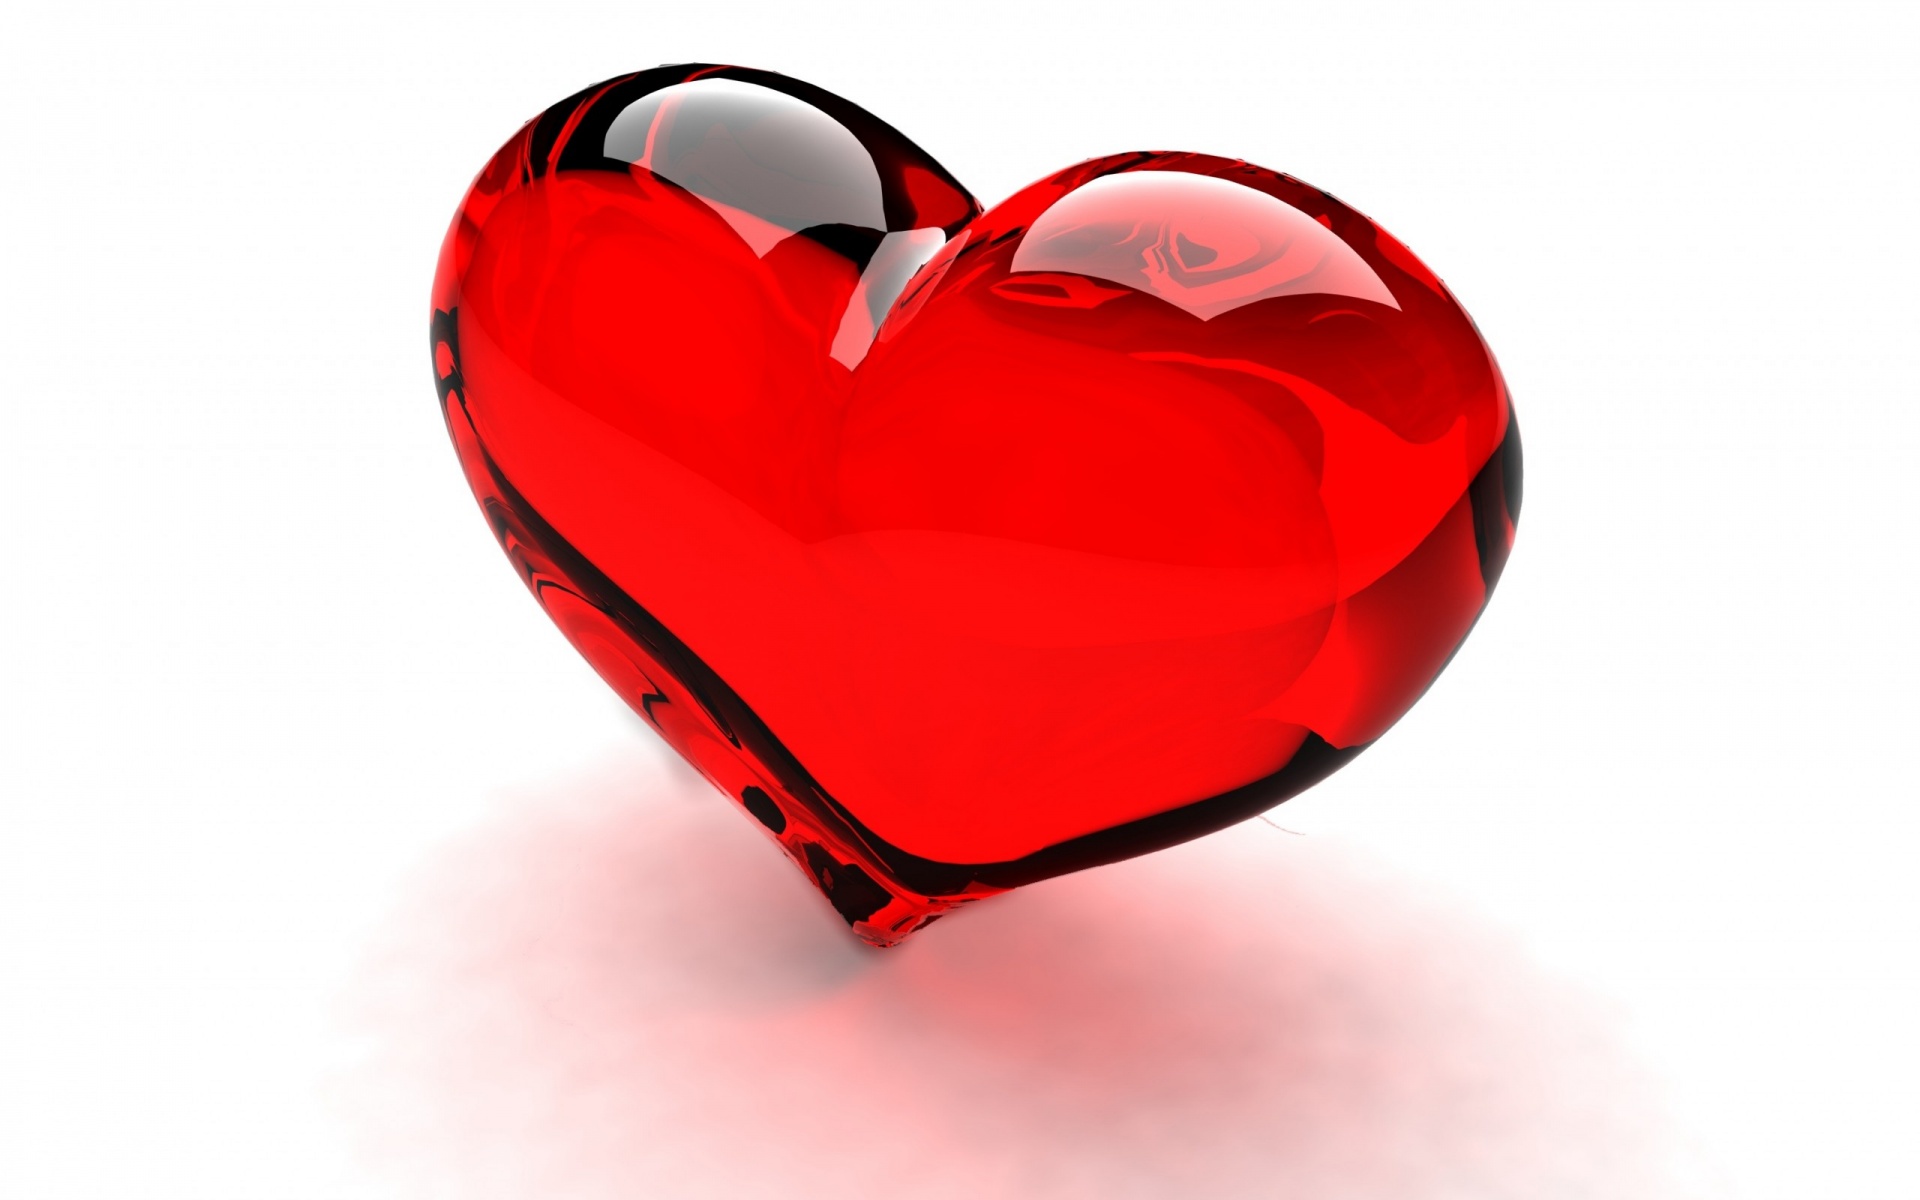 Red Heart Wallpaper HD In Love Imageci